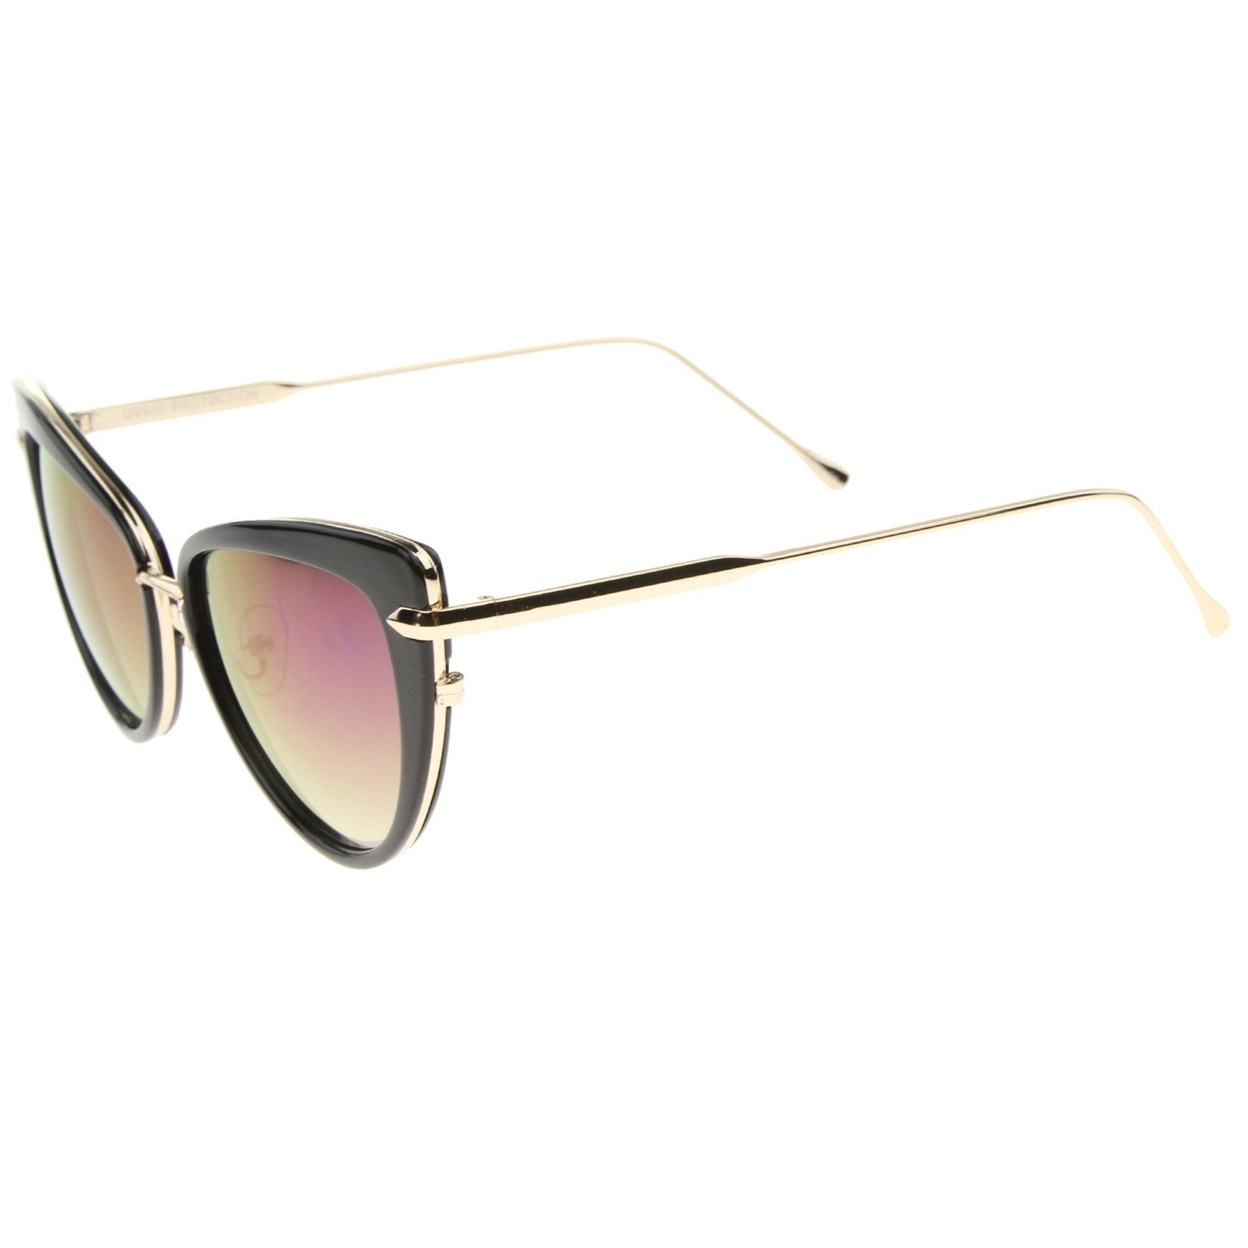 Women's High Fashion Metal Temple Super Cat Eye Sunglasses 55mm - Black-Silver / Yellow Mirror